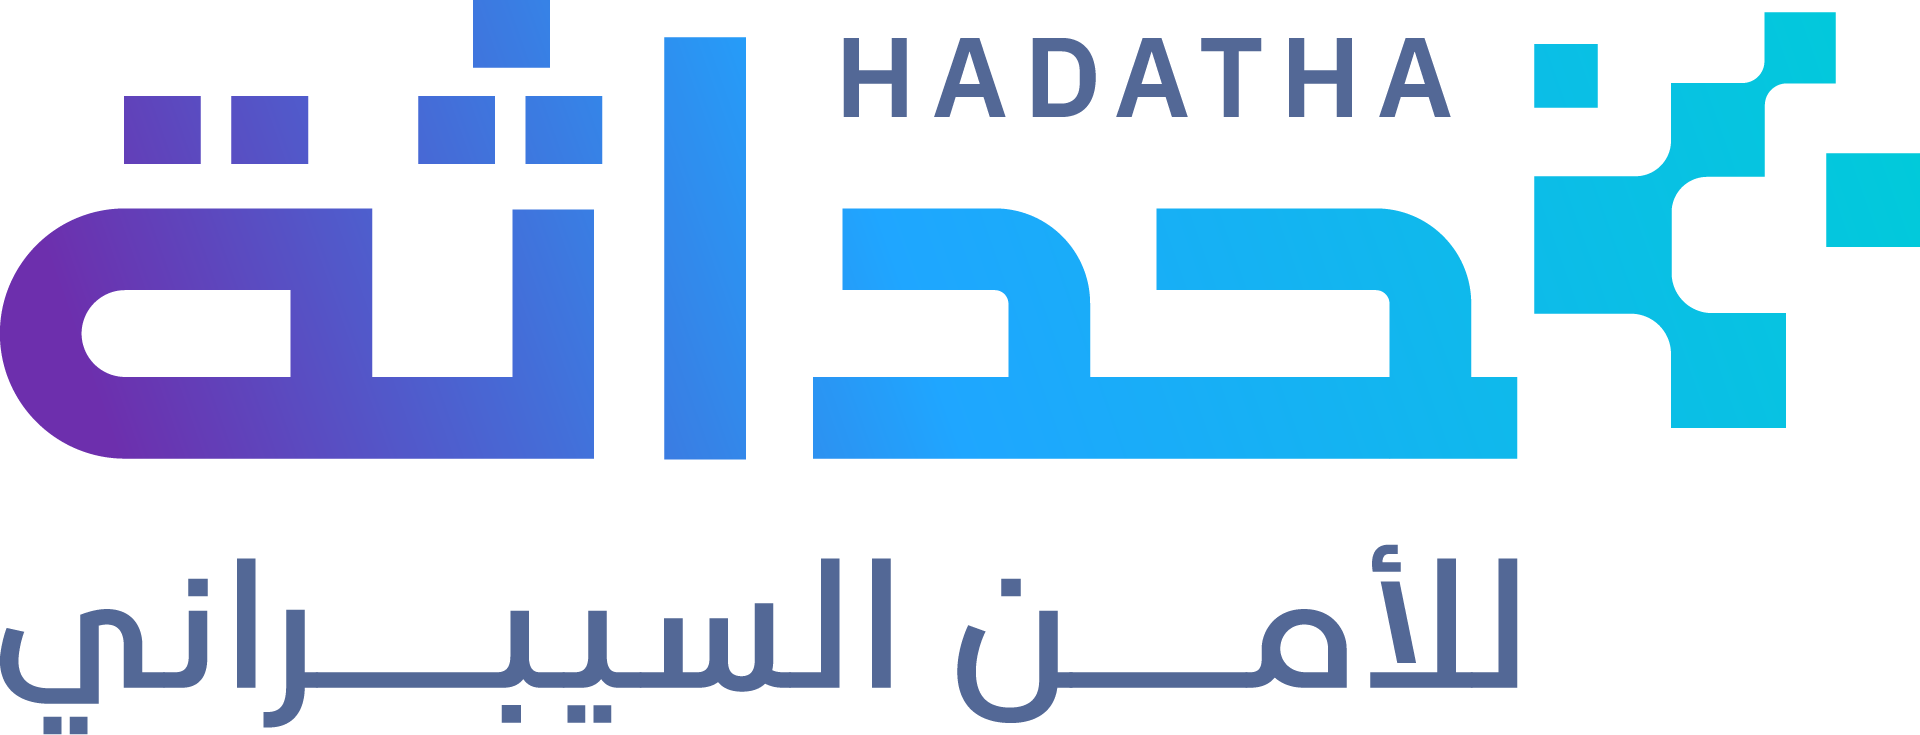 hadatha